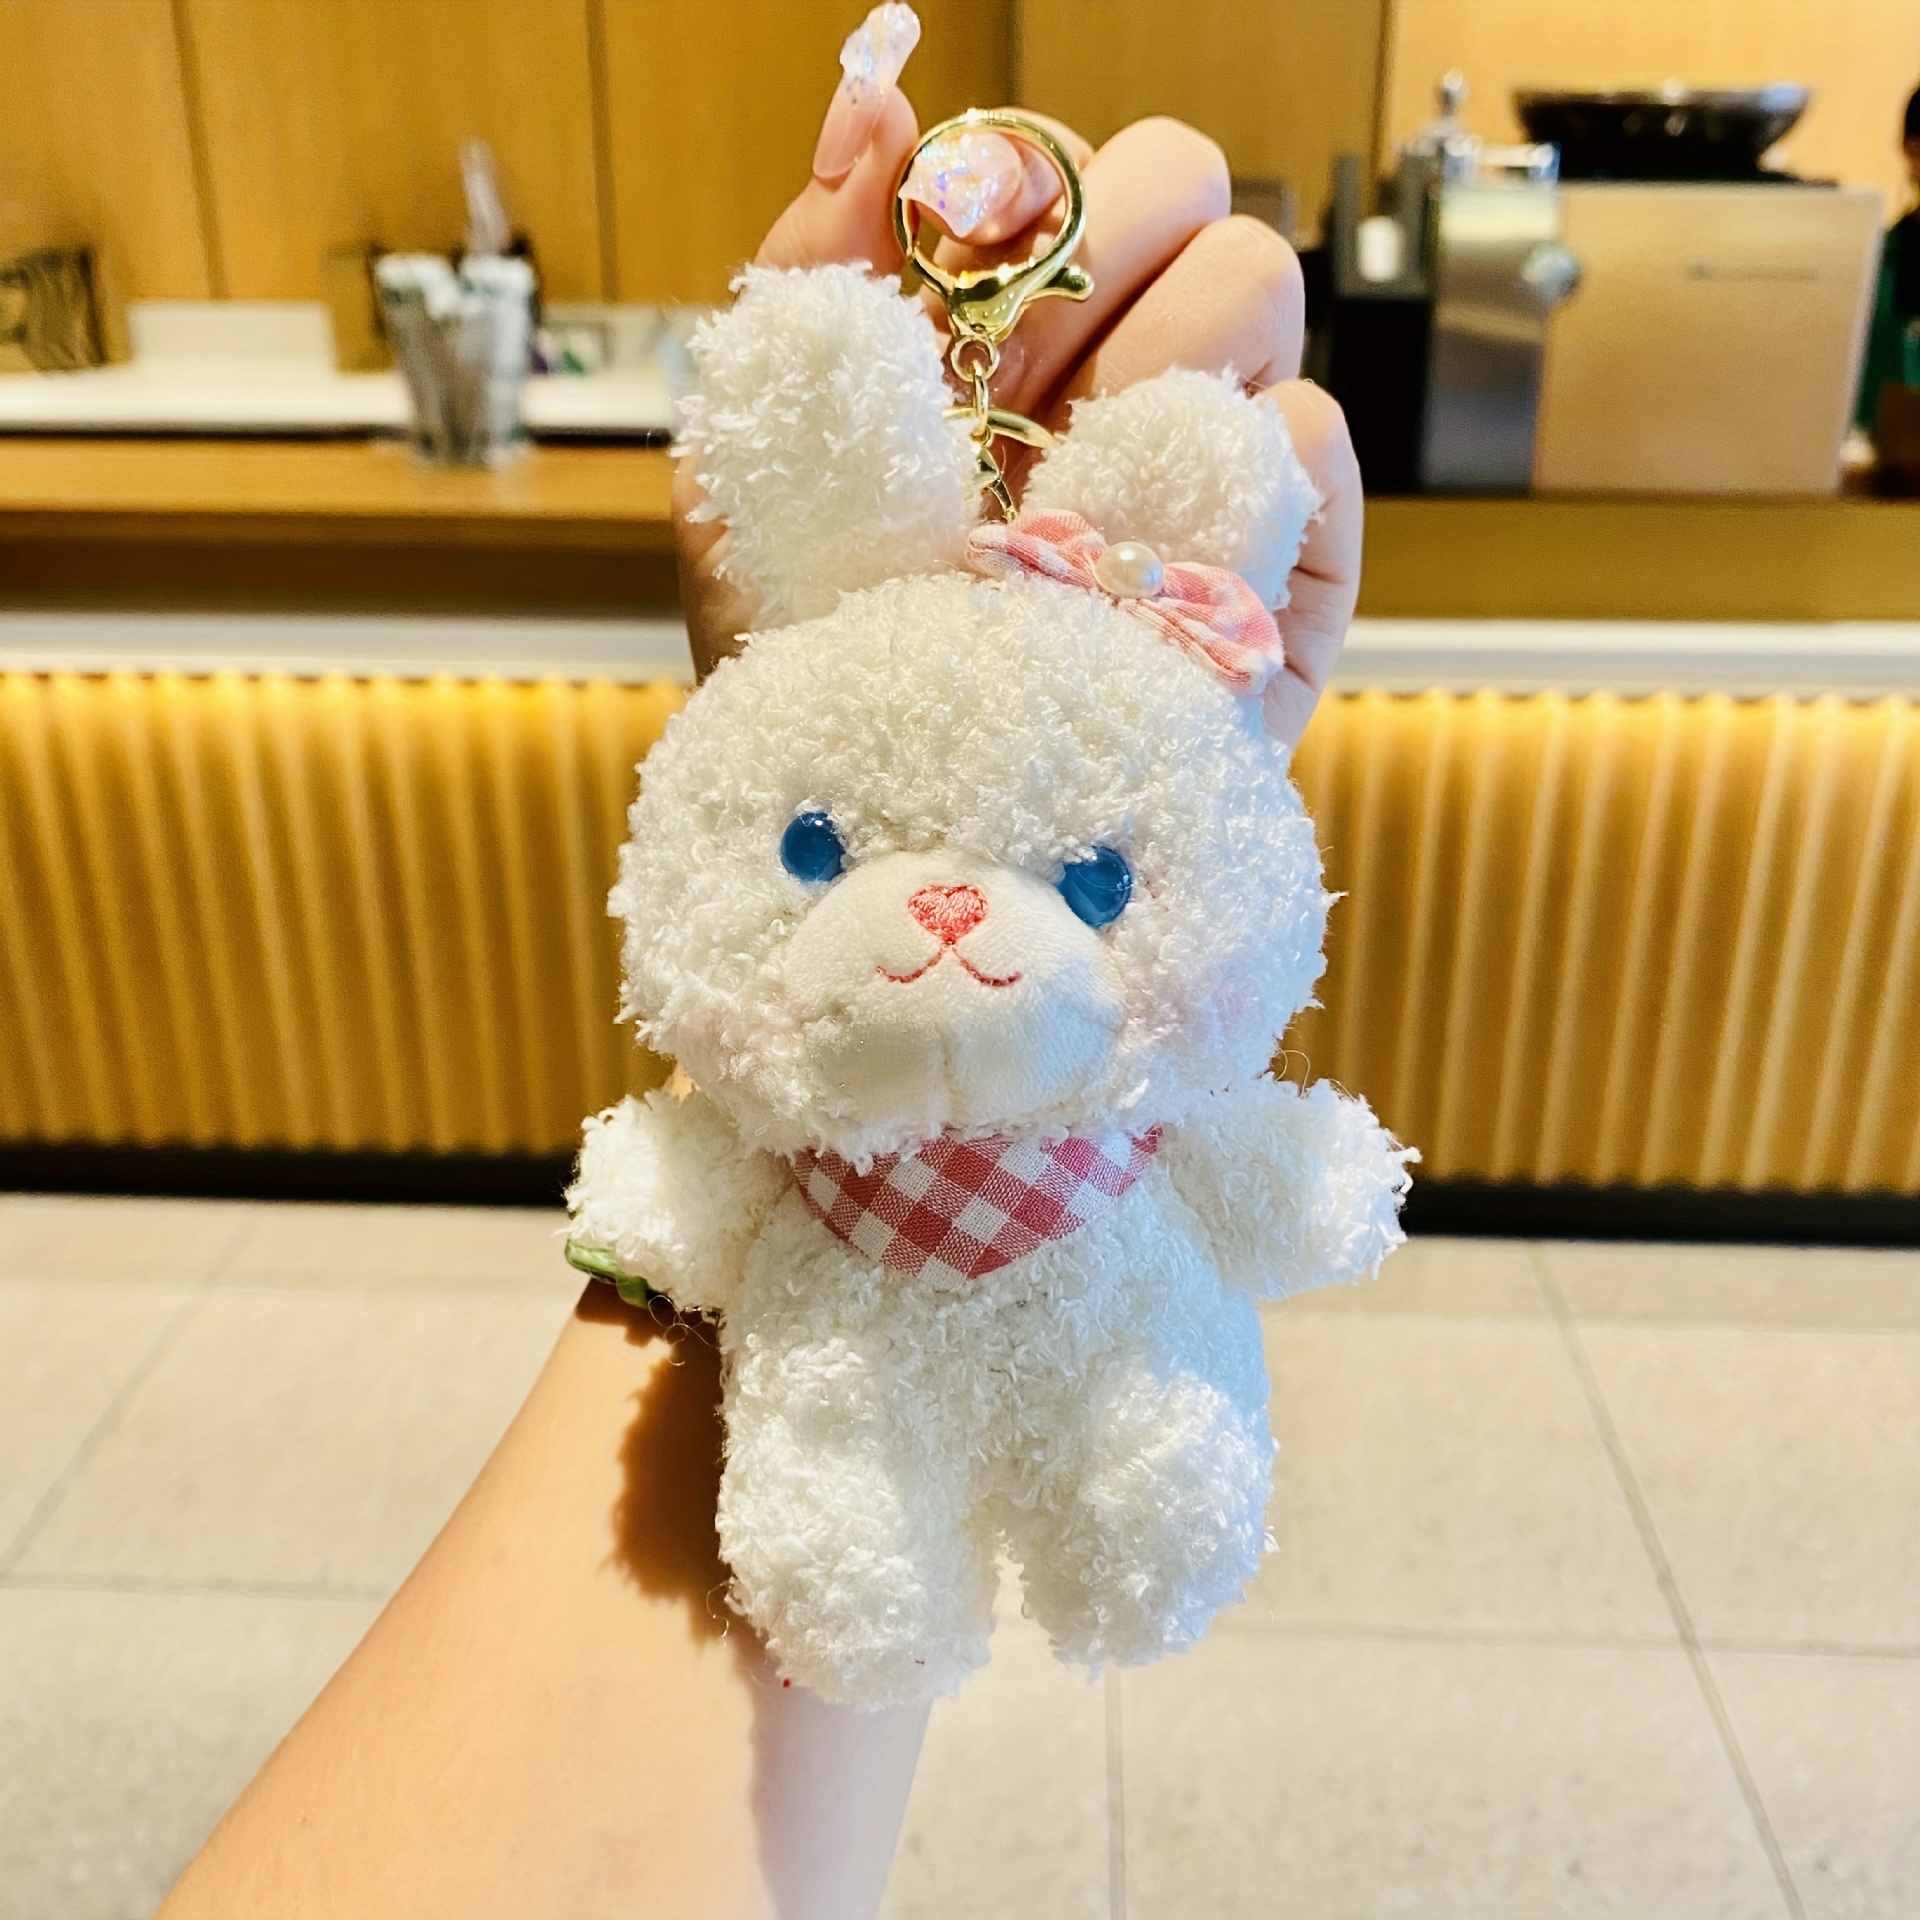 rabbit doll keychain